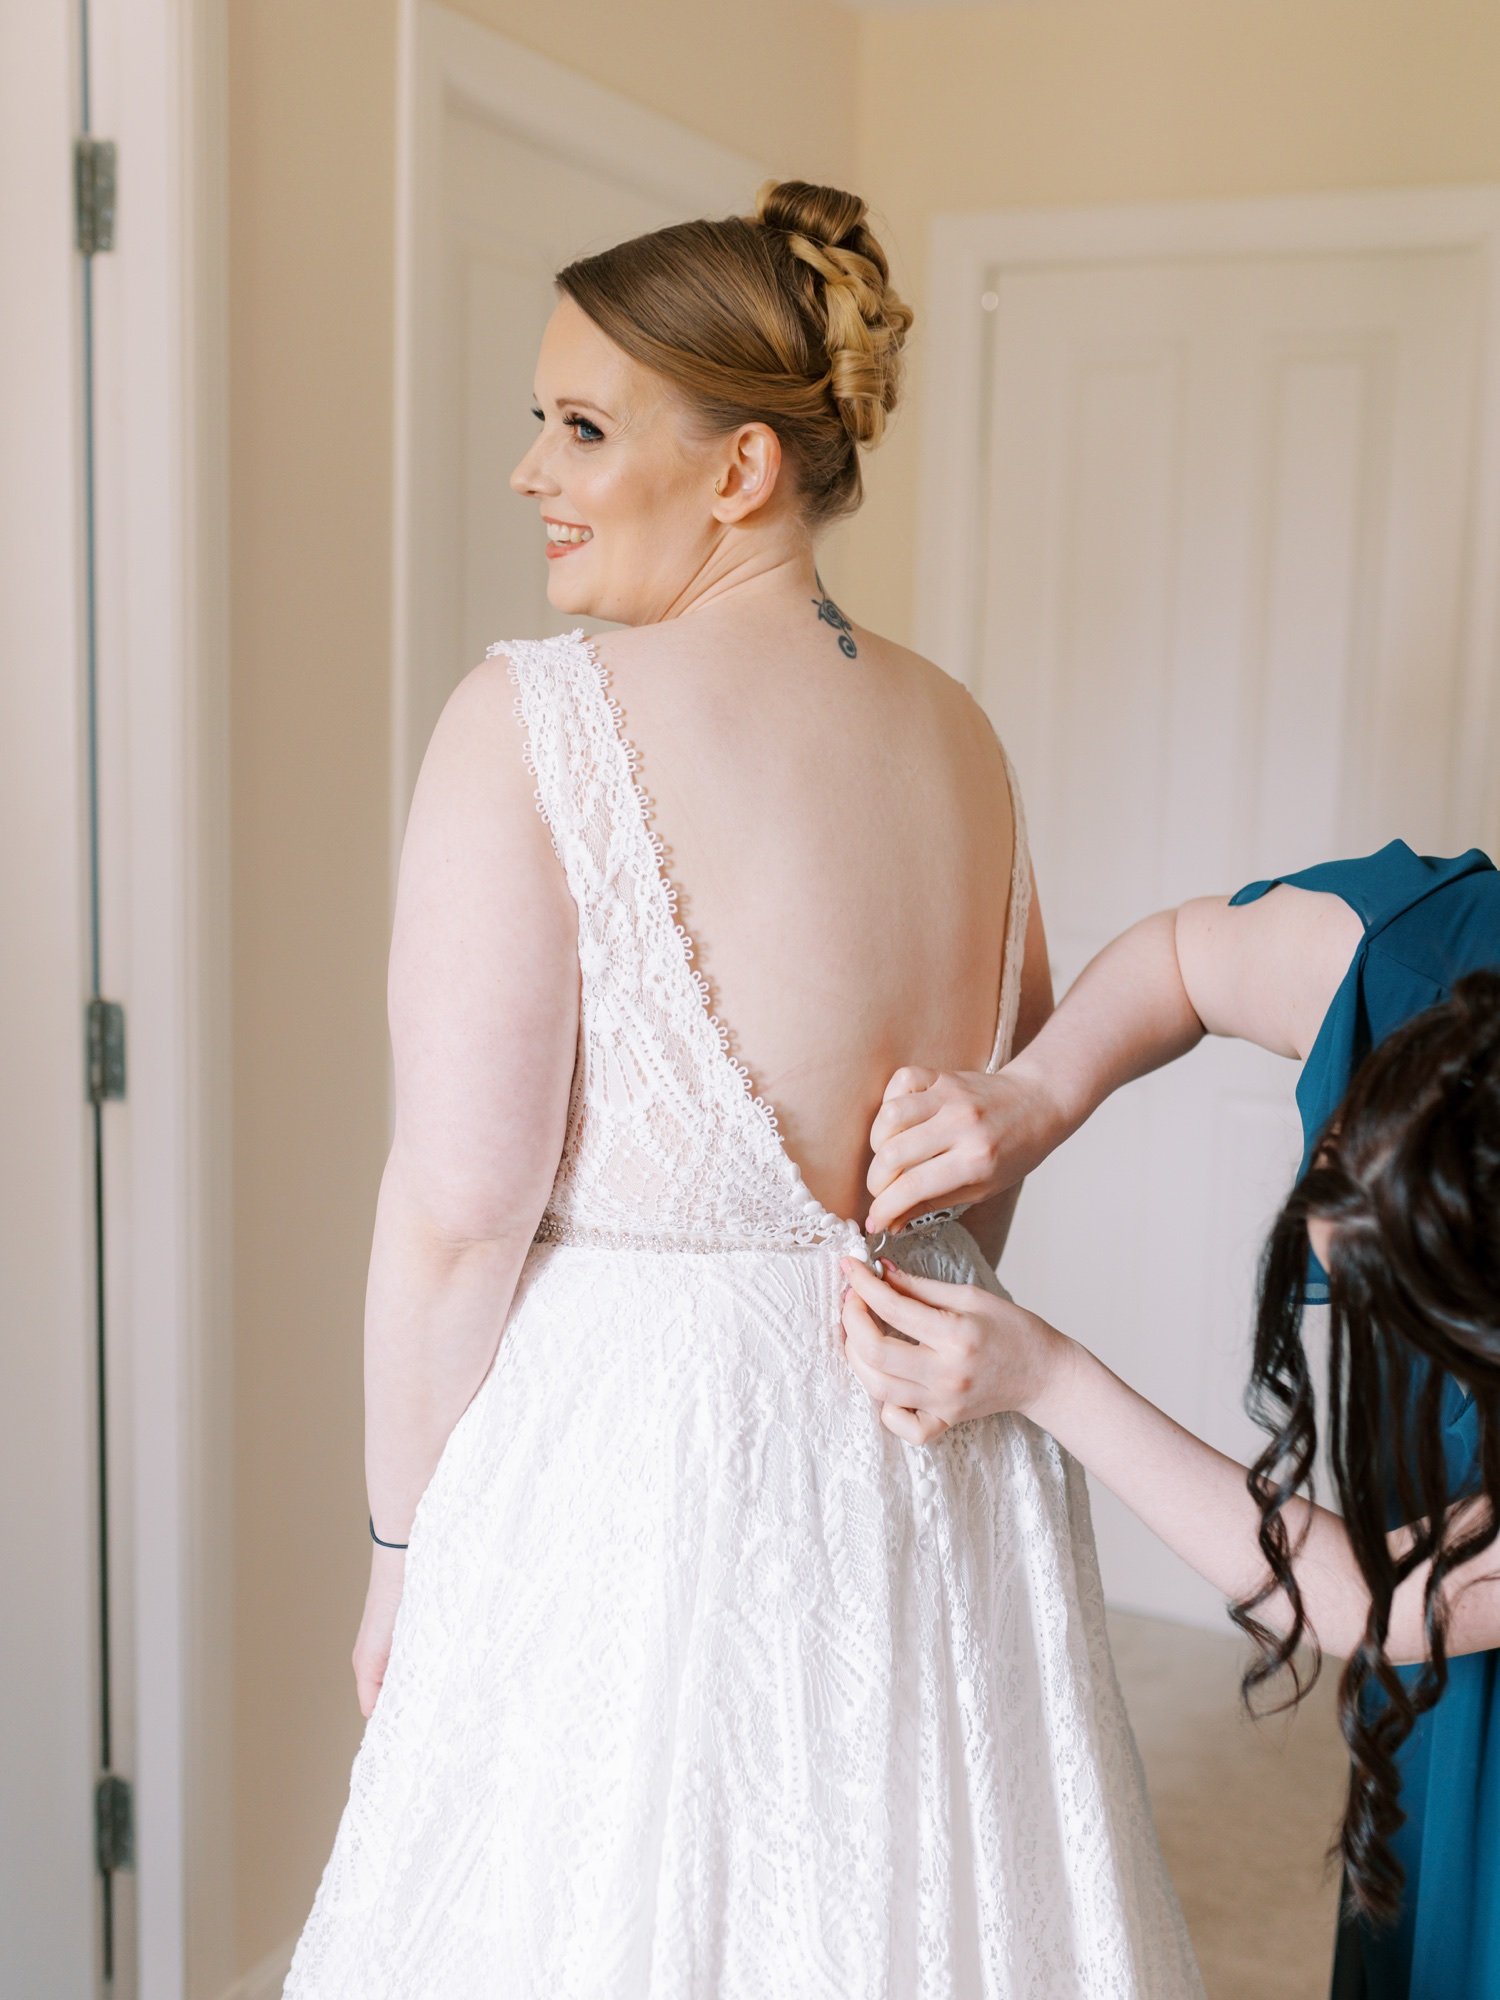 04_bride getting her wedding dress on .jpg